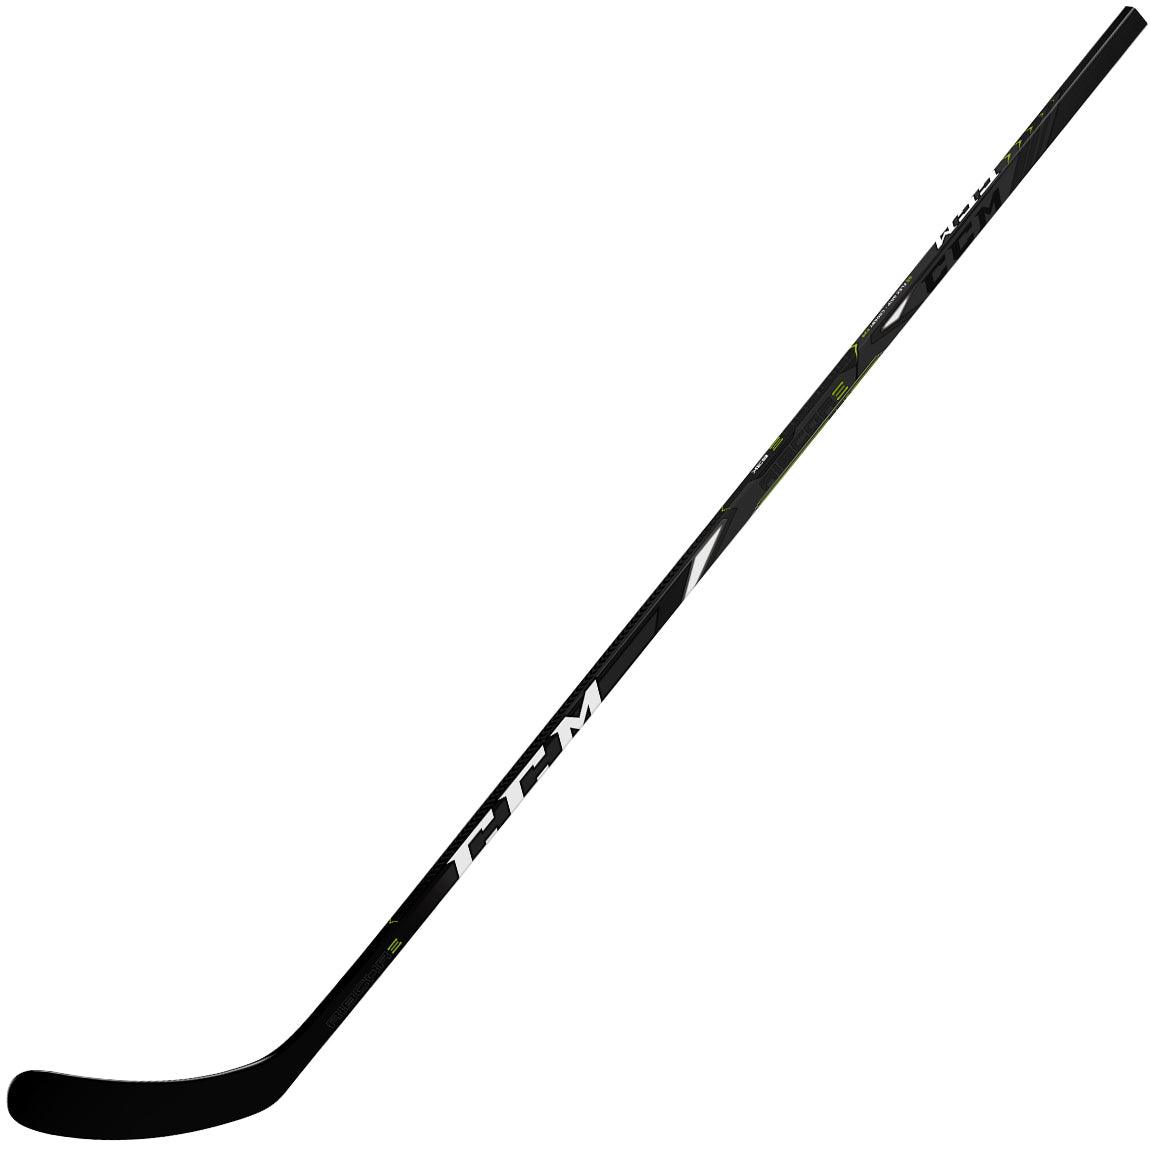 Ribcor 63K Hockey Stick - Senior - Sports Excellence